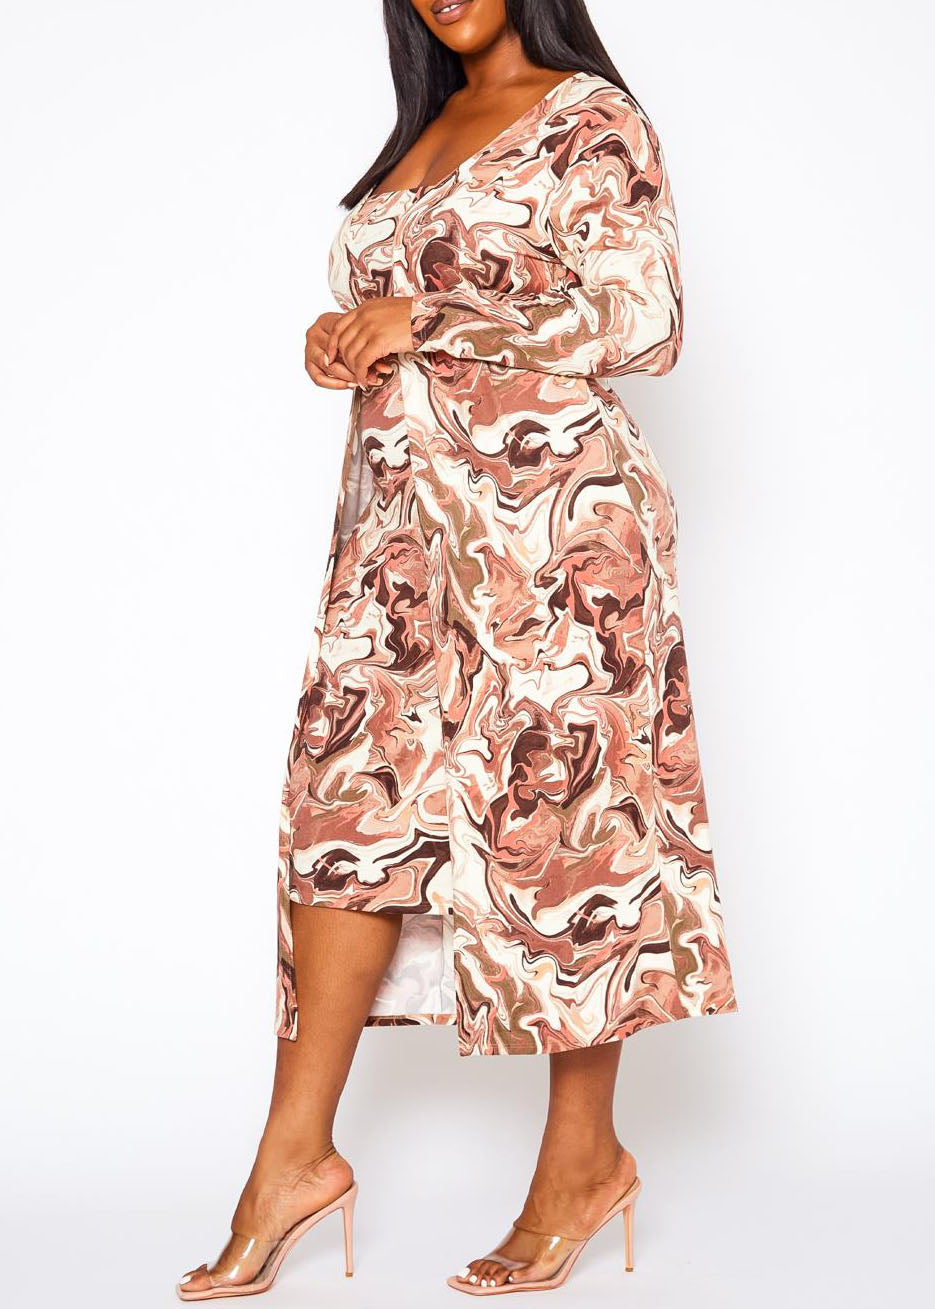 Hi Curvy Plus Size Women Knit Tube Midi Dress and Cardigan Set